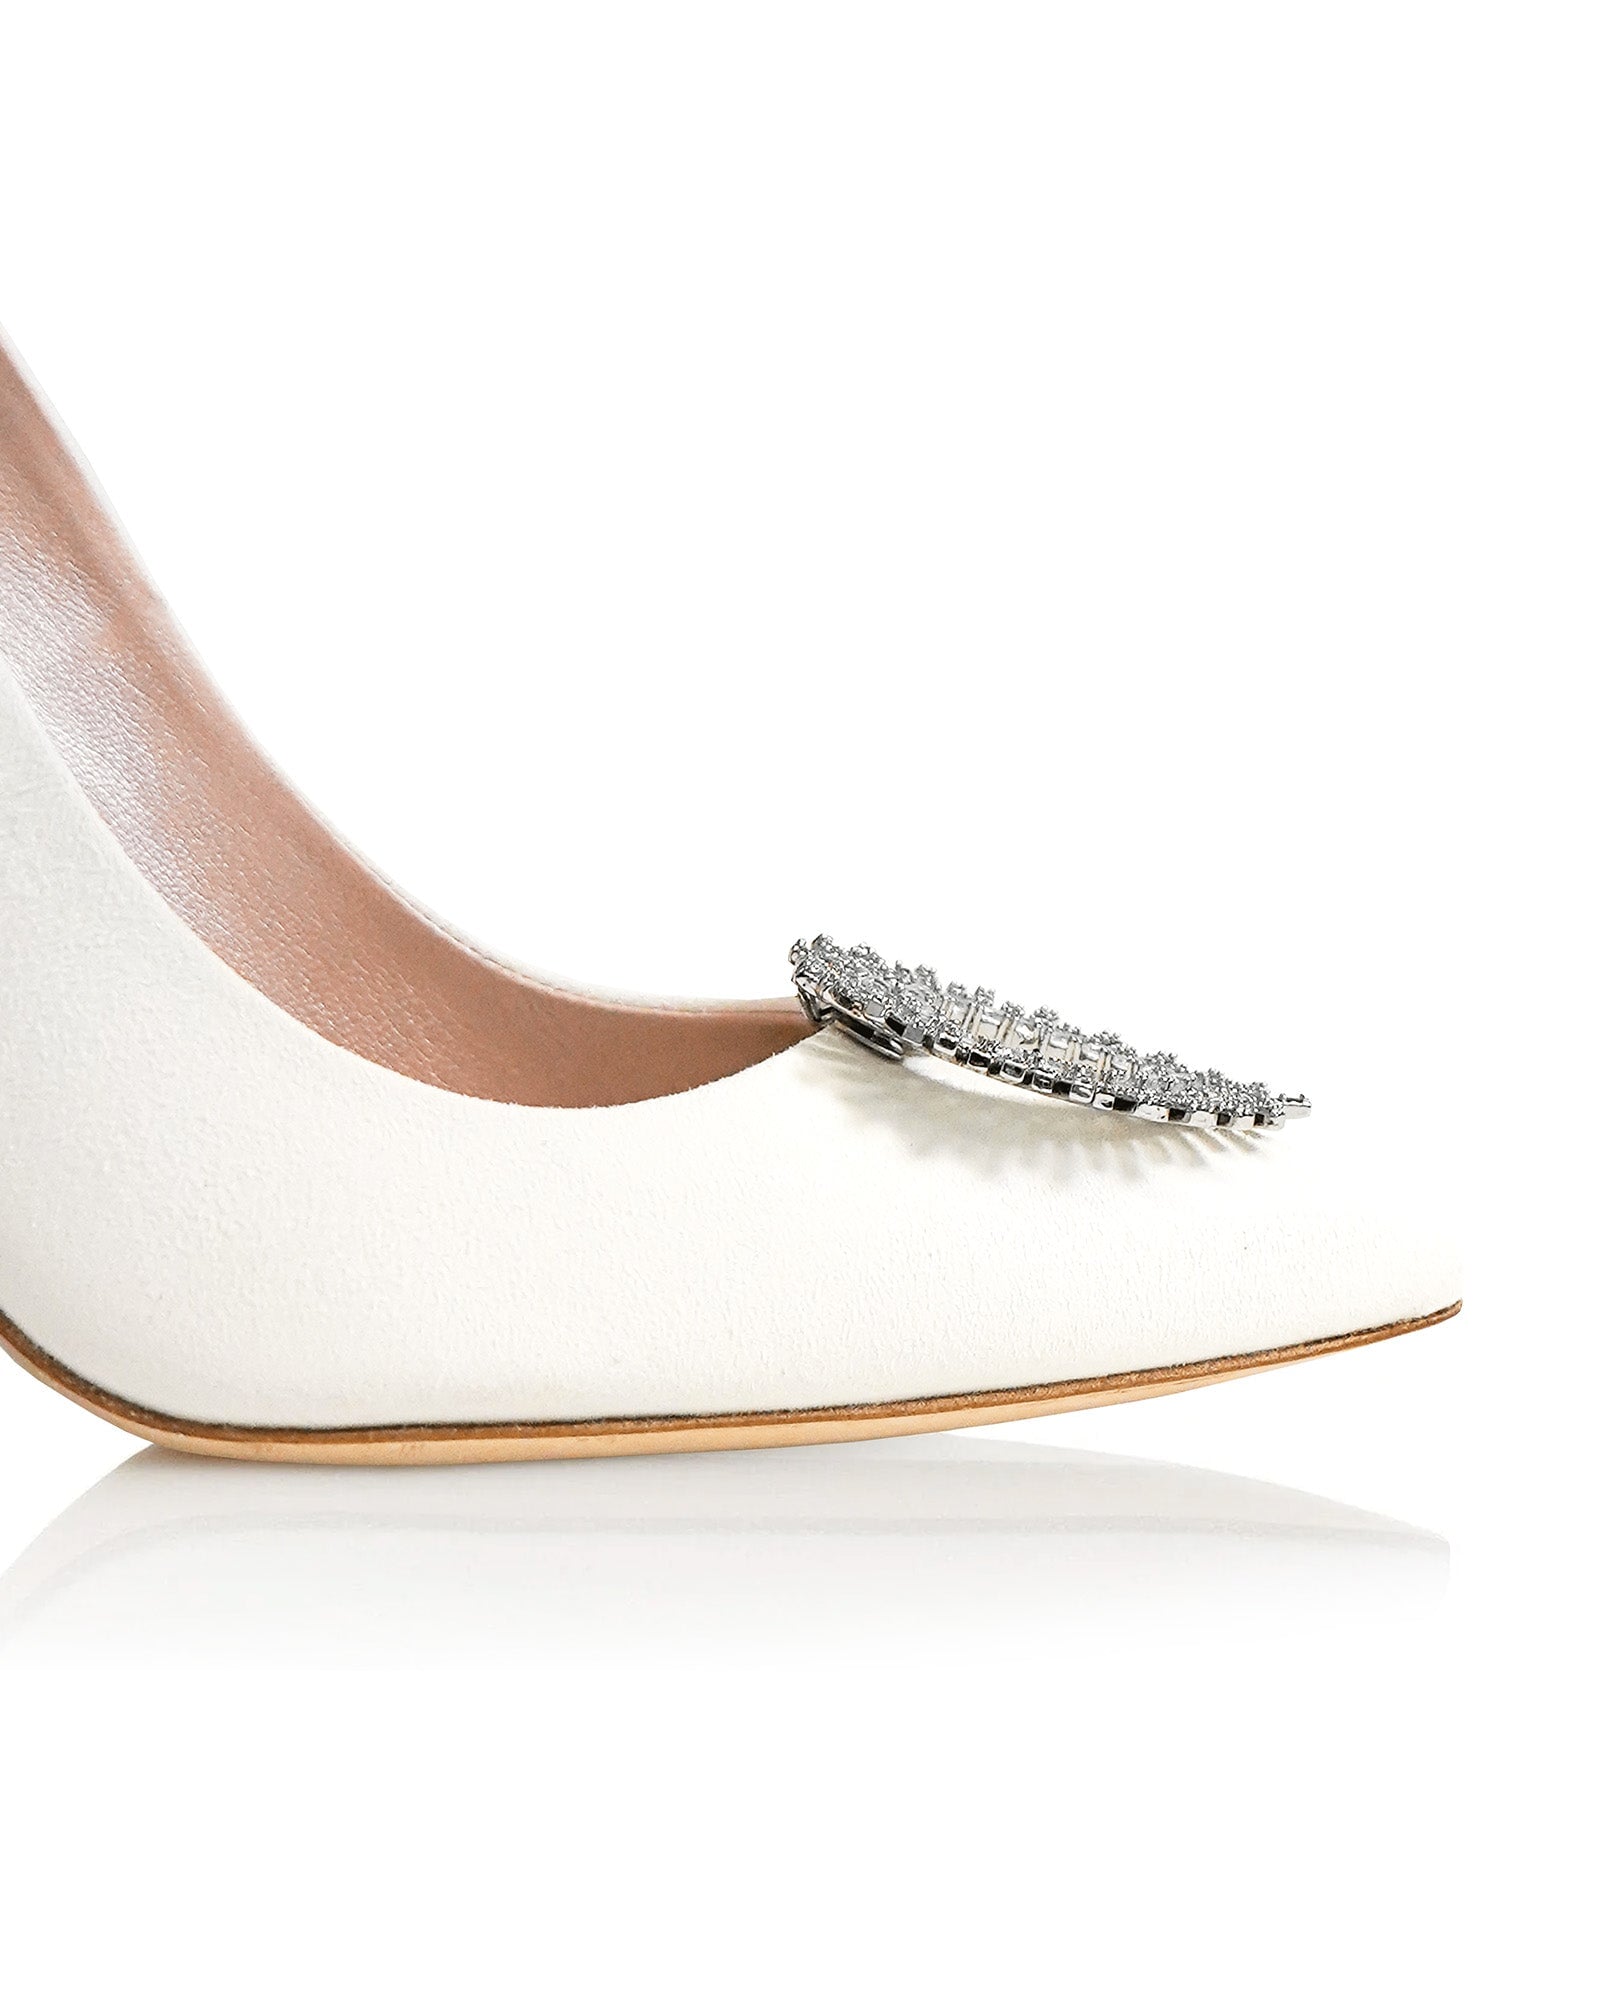 Crystal Heart Shoe Clips Bridal Shoe Clip Crystal Shoe Clips  image